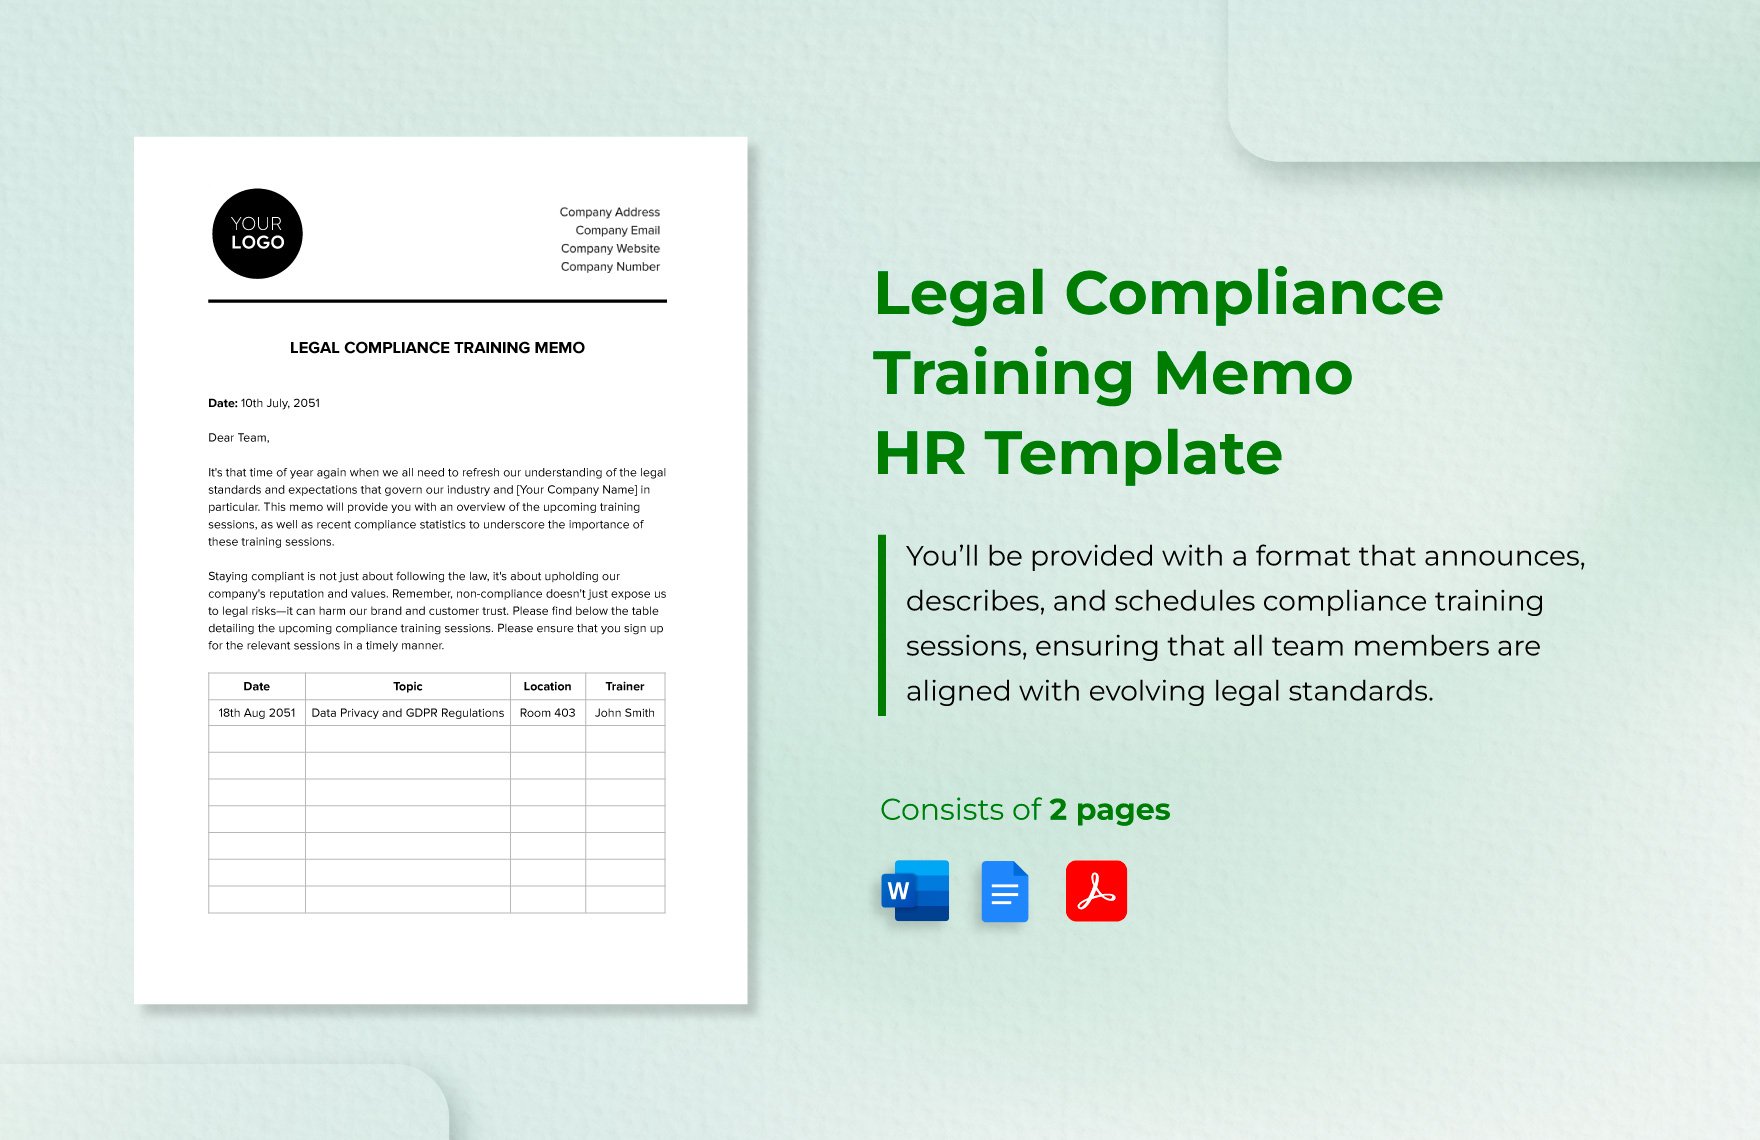 Legal Compliance Training Memo HR Template